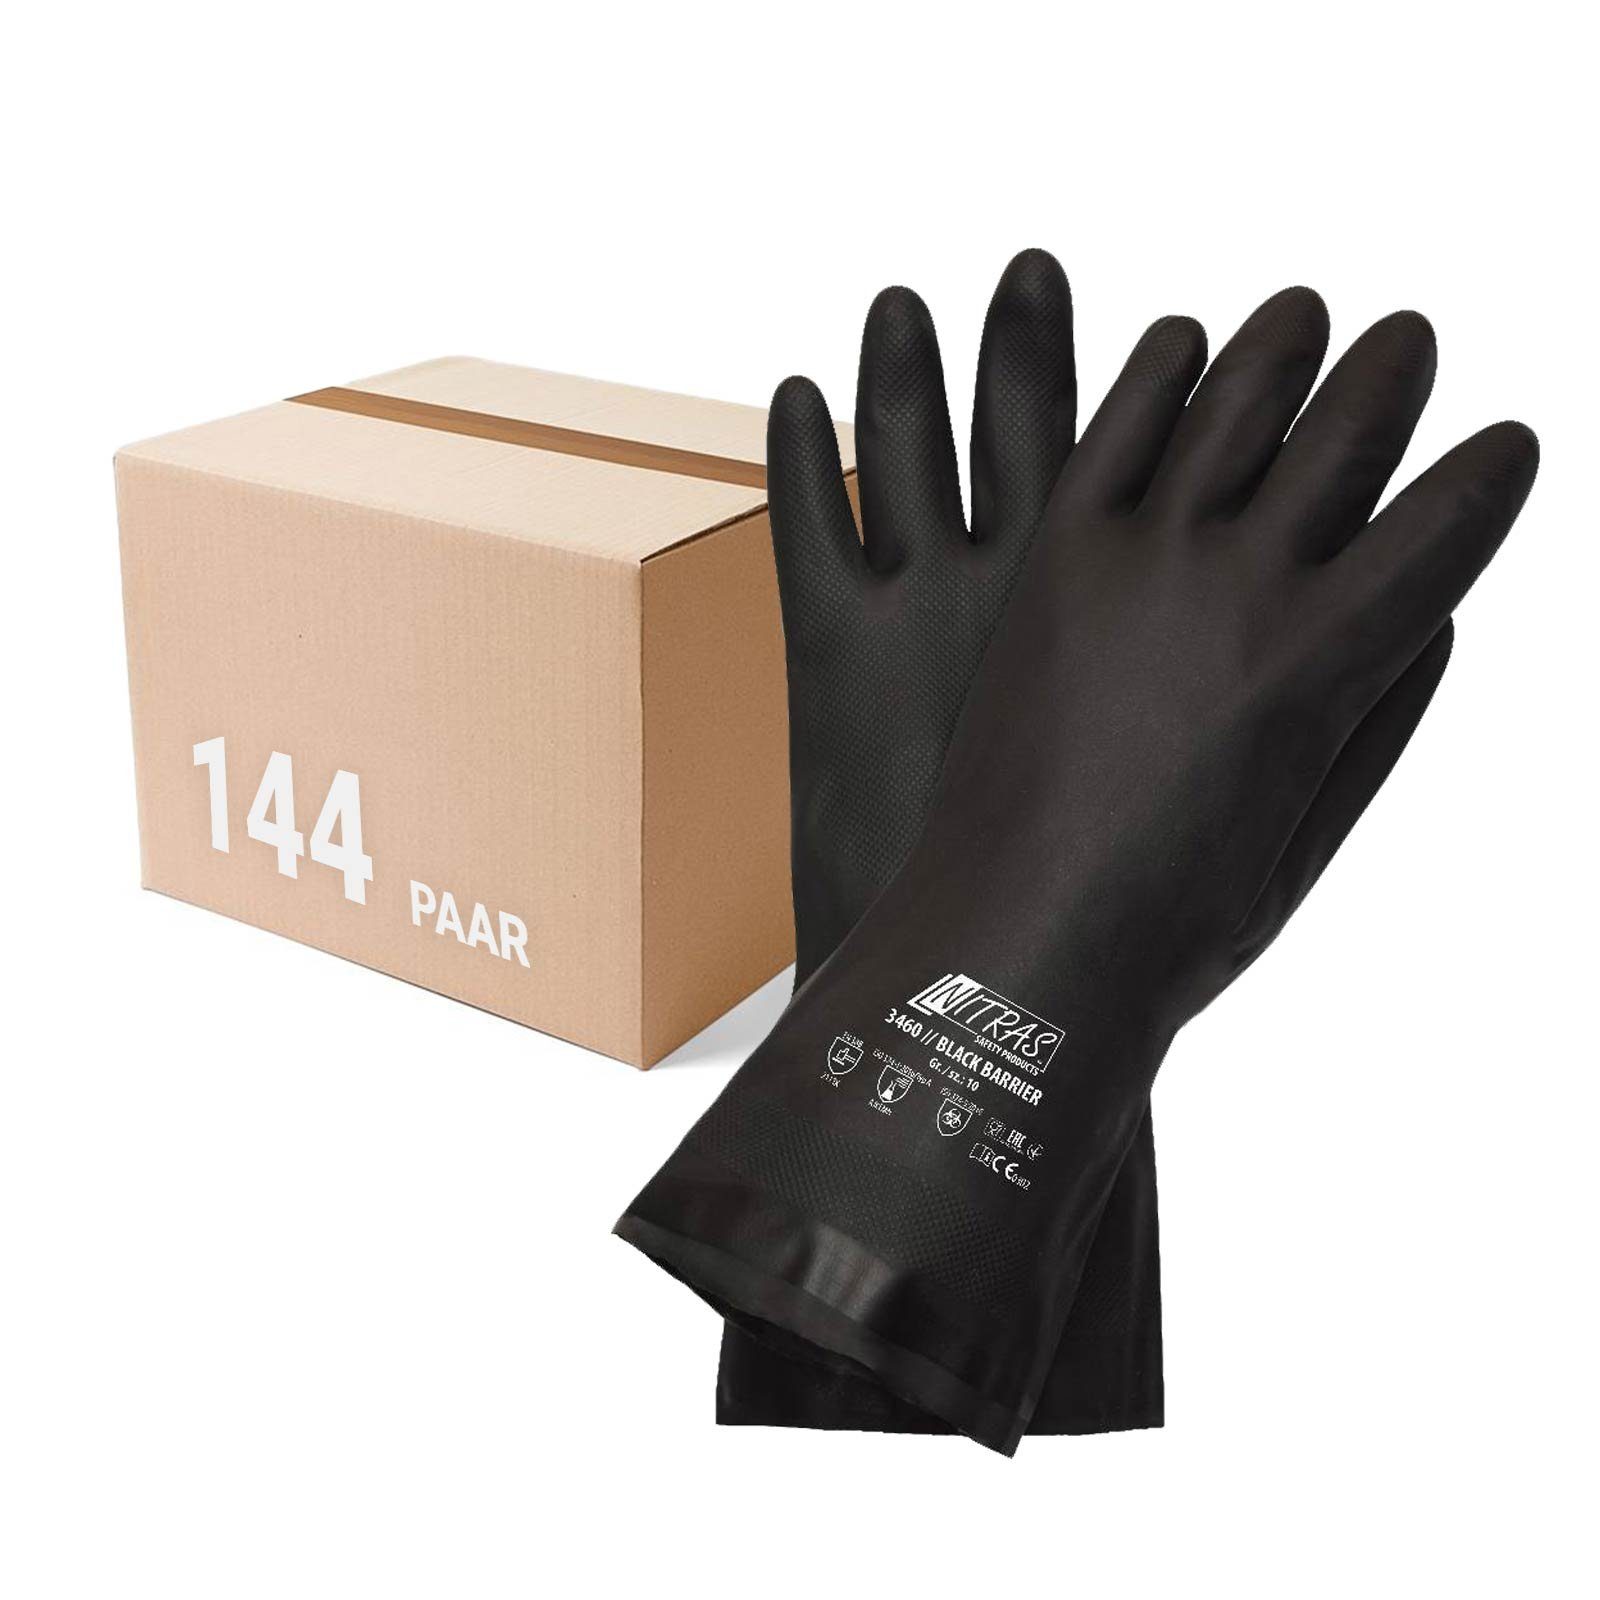 Nitras Putzhandschuh Chloroprene-Handschuhe 3460 Black Barrier velourisiert 144 Paar (Set)